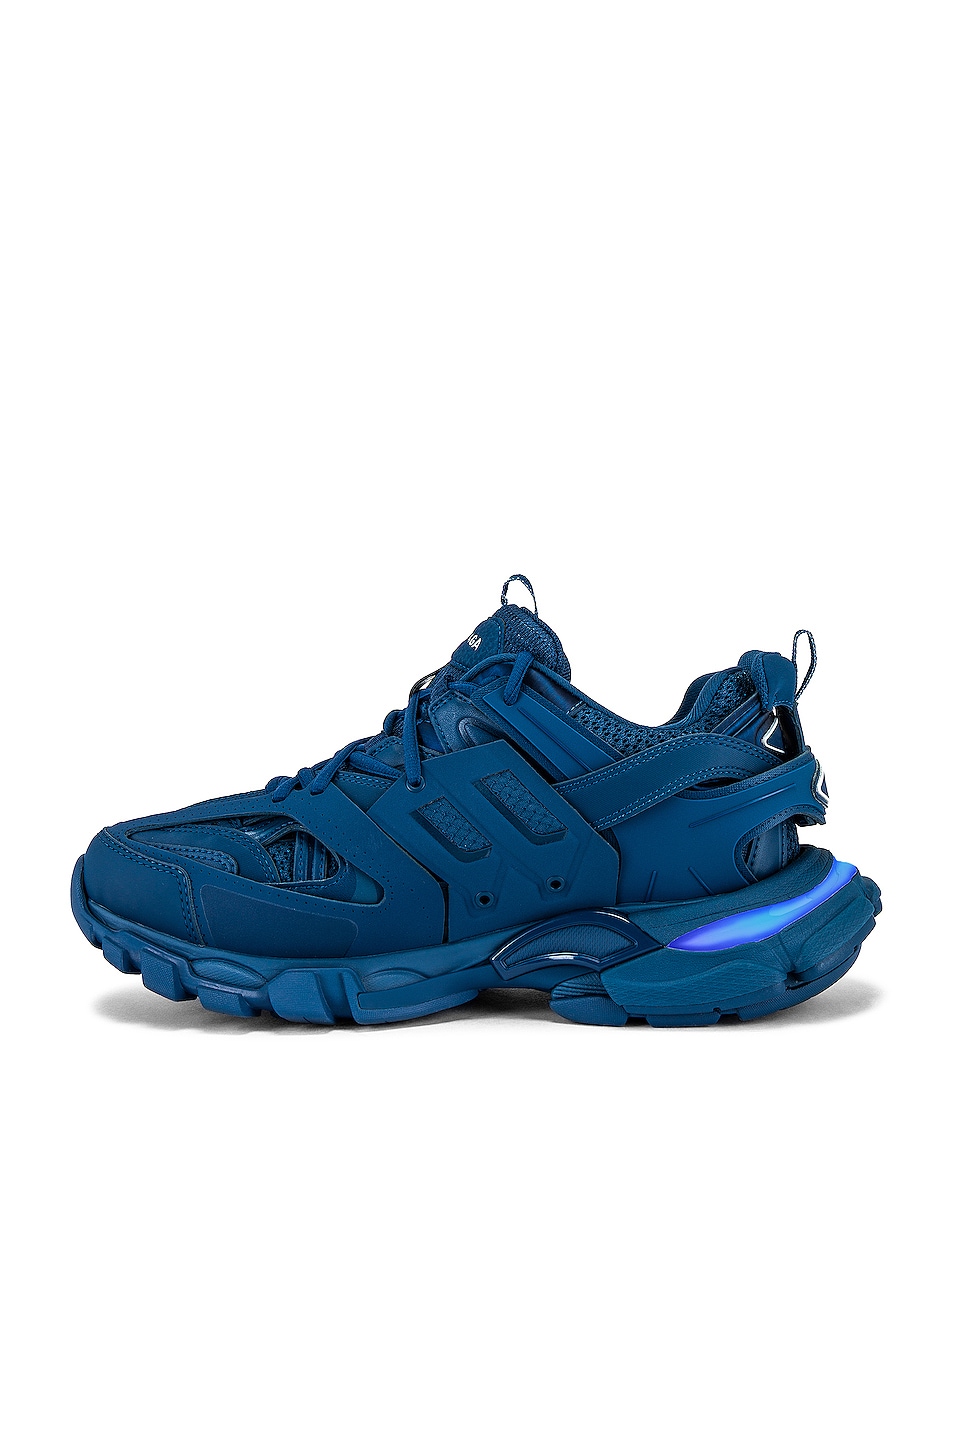 Balenciaga LED Track Sneaker in Blue | FWRD